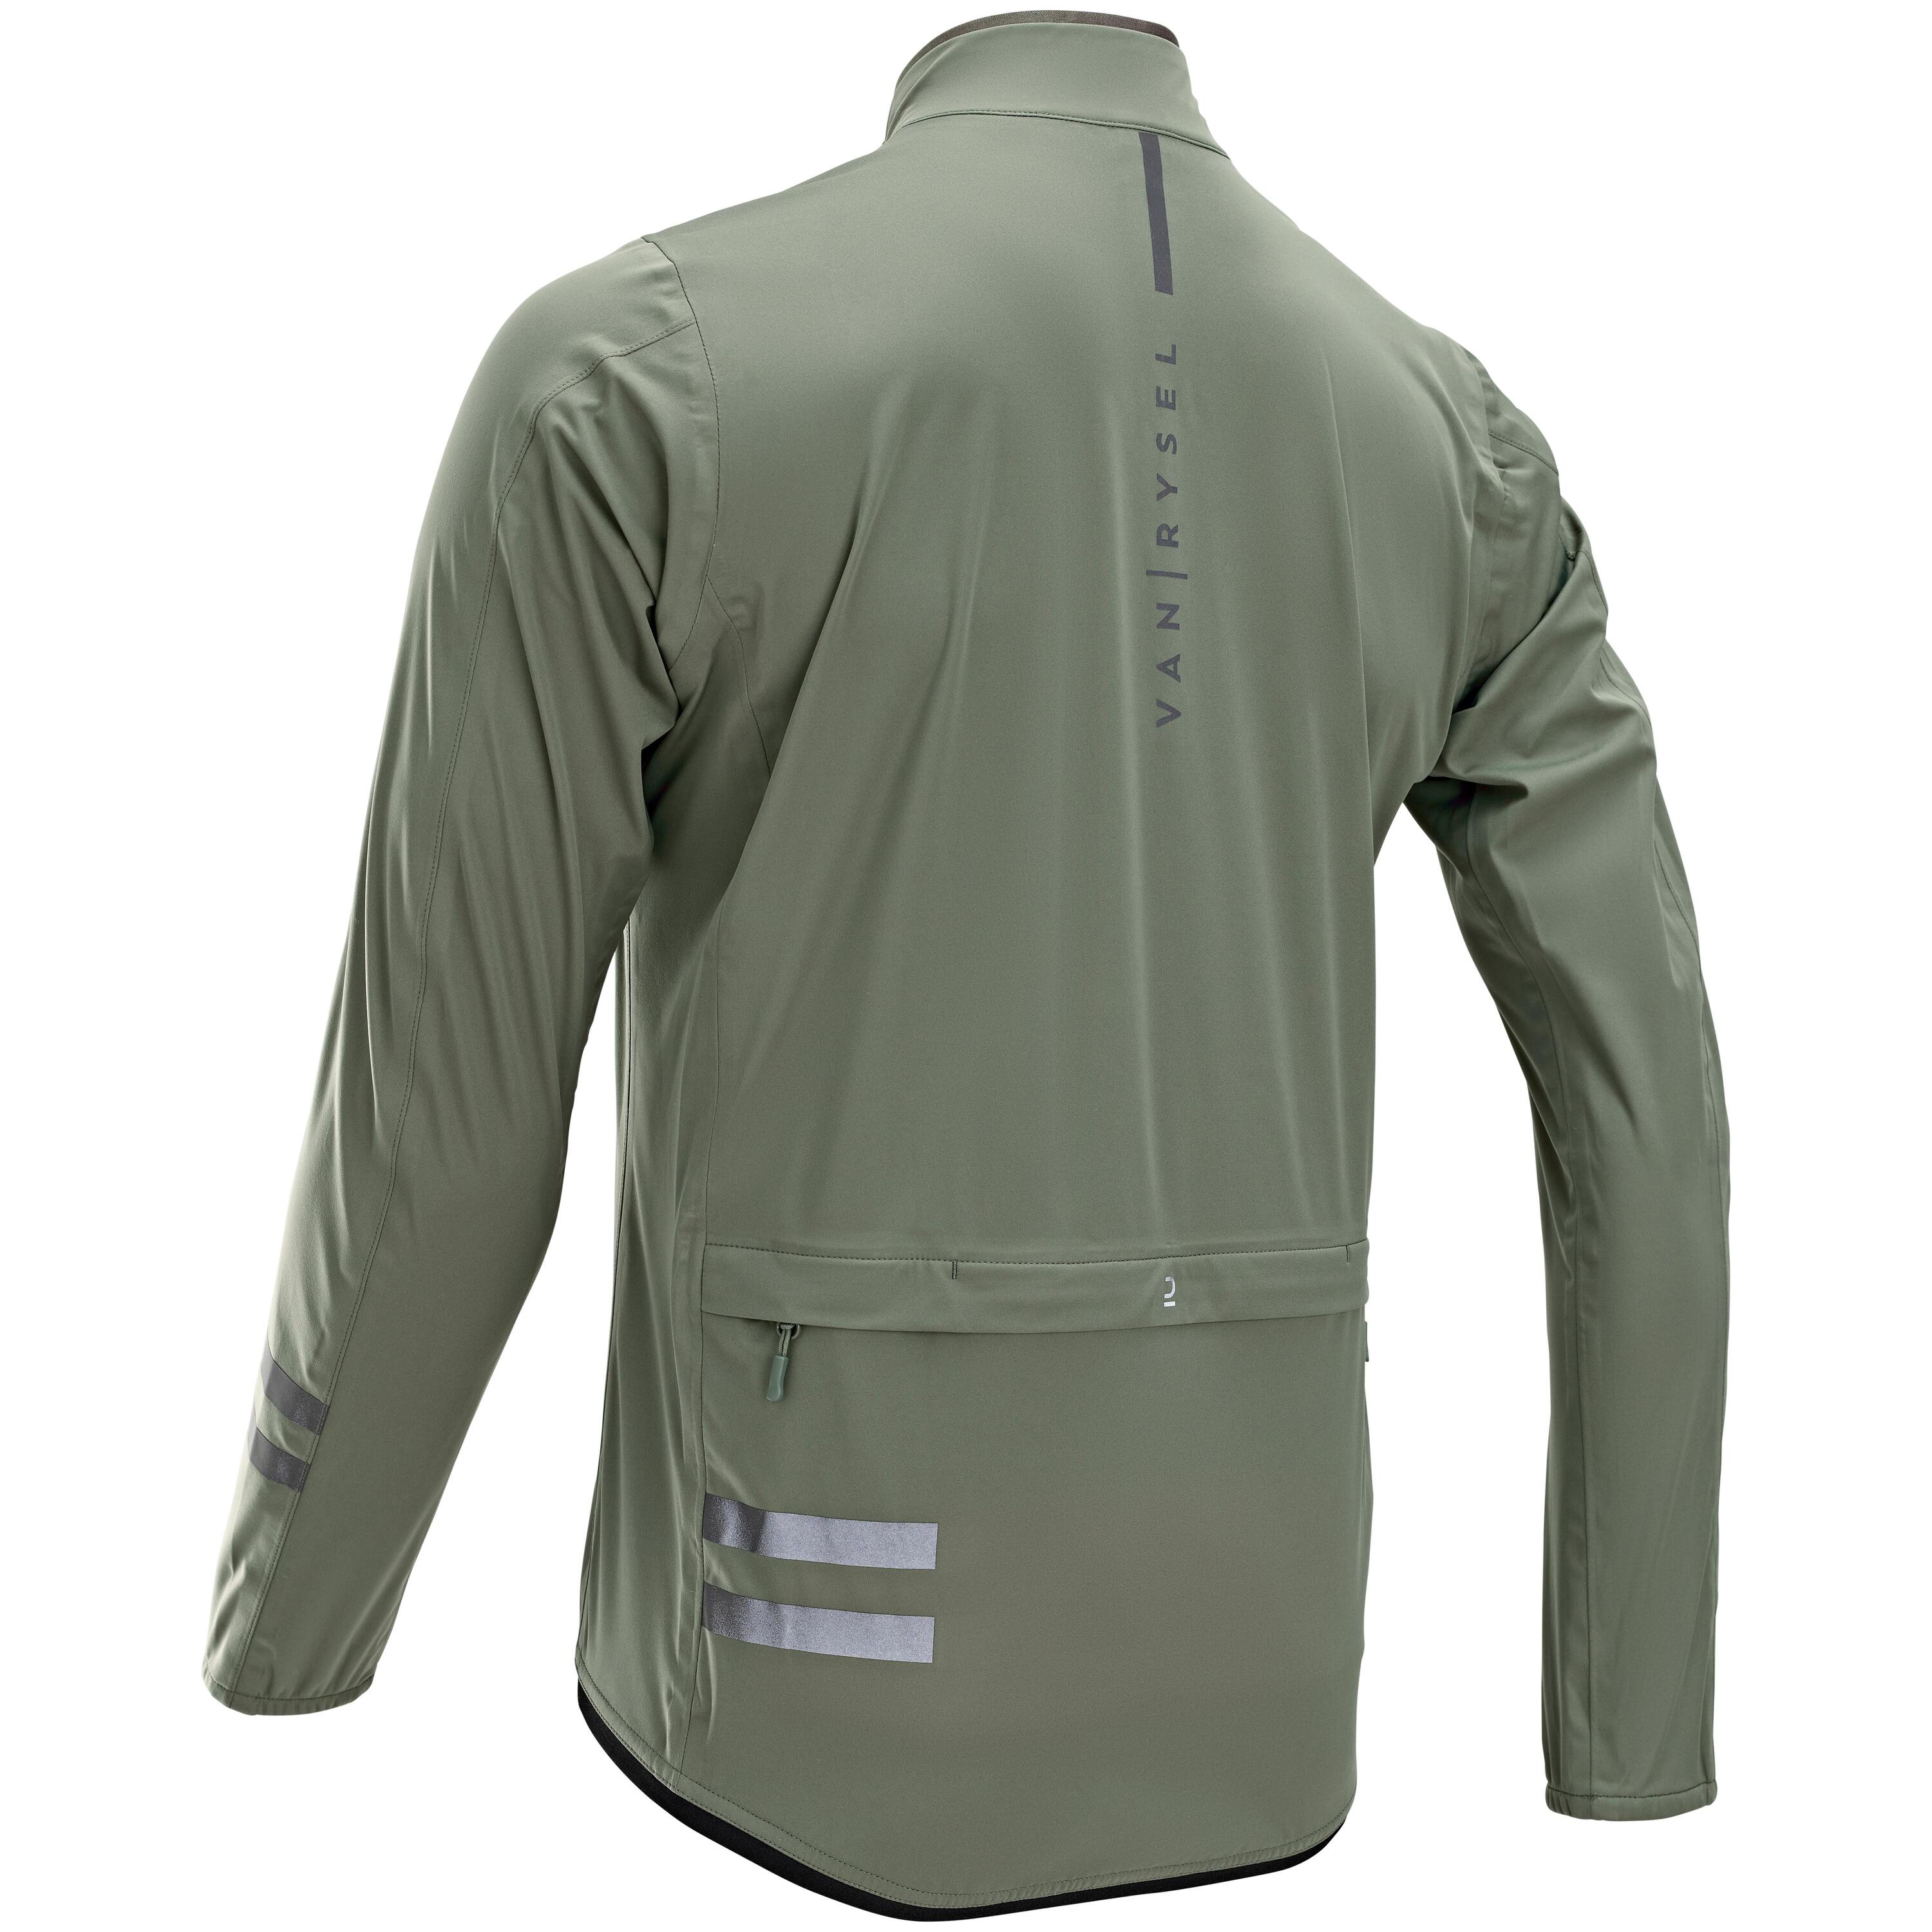 Men's Long-Sleeved Showerproof Road Cycling Jacket RC 500 - Khaki 3/8